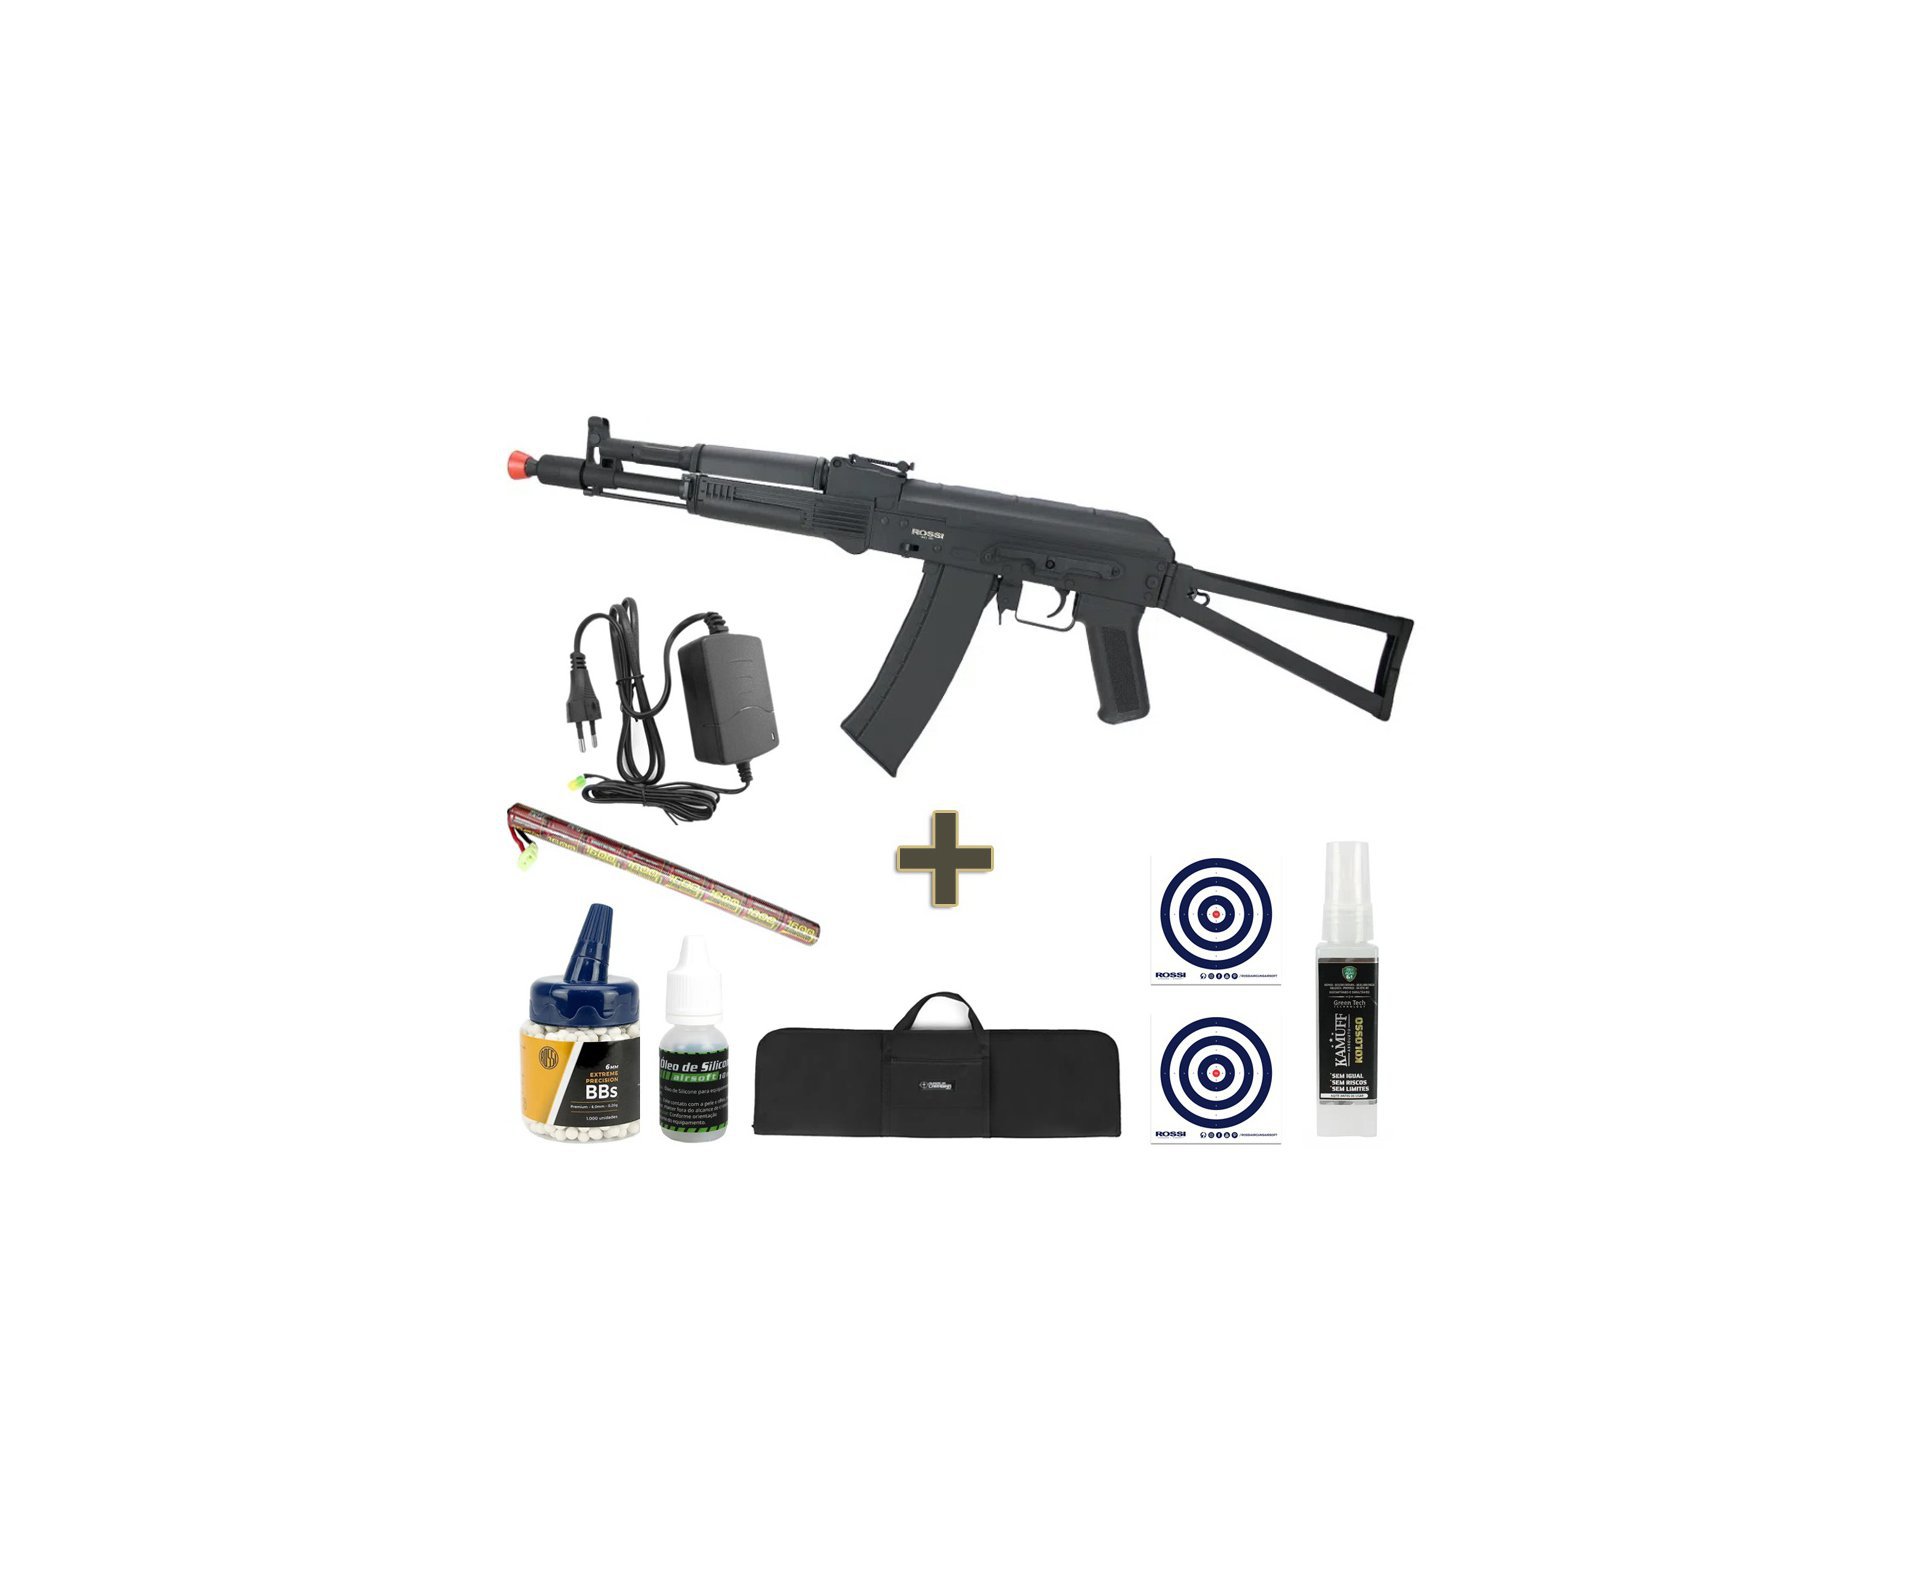 Rifle de Airsoft Neptune AK105S mosfet Full Metal 6mm - Rossi + Bateria + Carregador + Capa + BBS + Óleo + Alvos + Kamuff